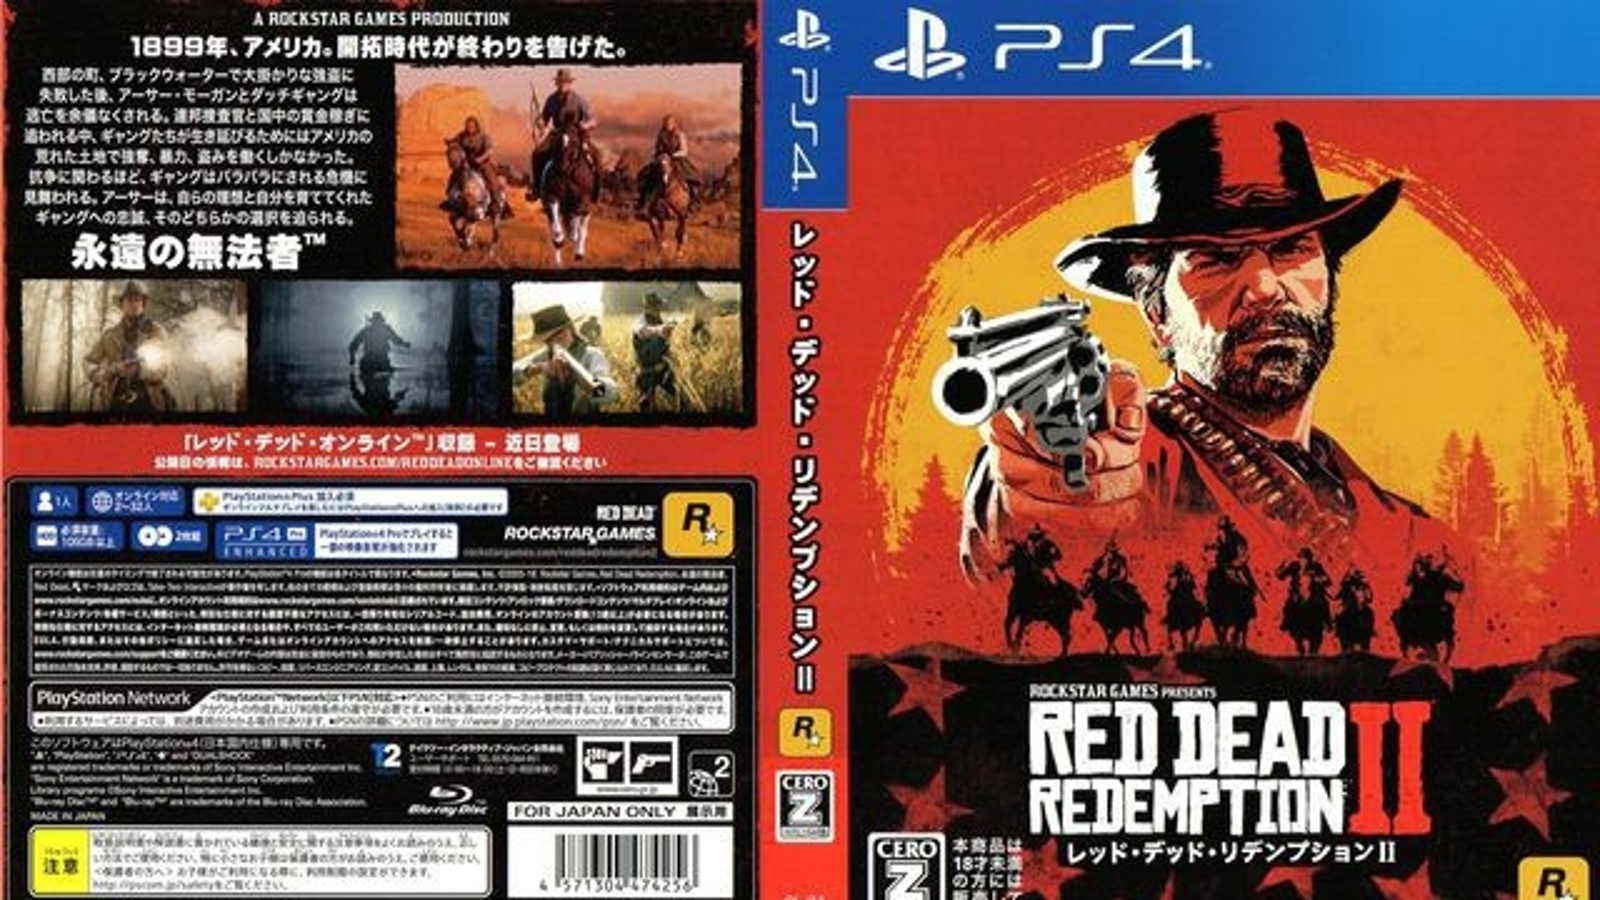 PS4 vs PC looks amazing! :D : r/reddeadredemption